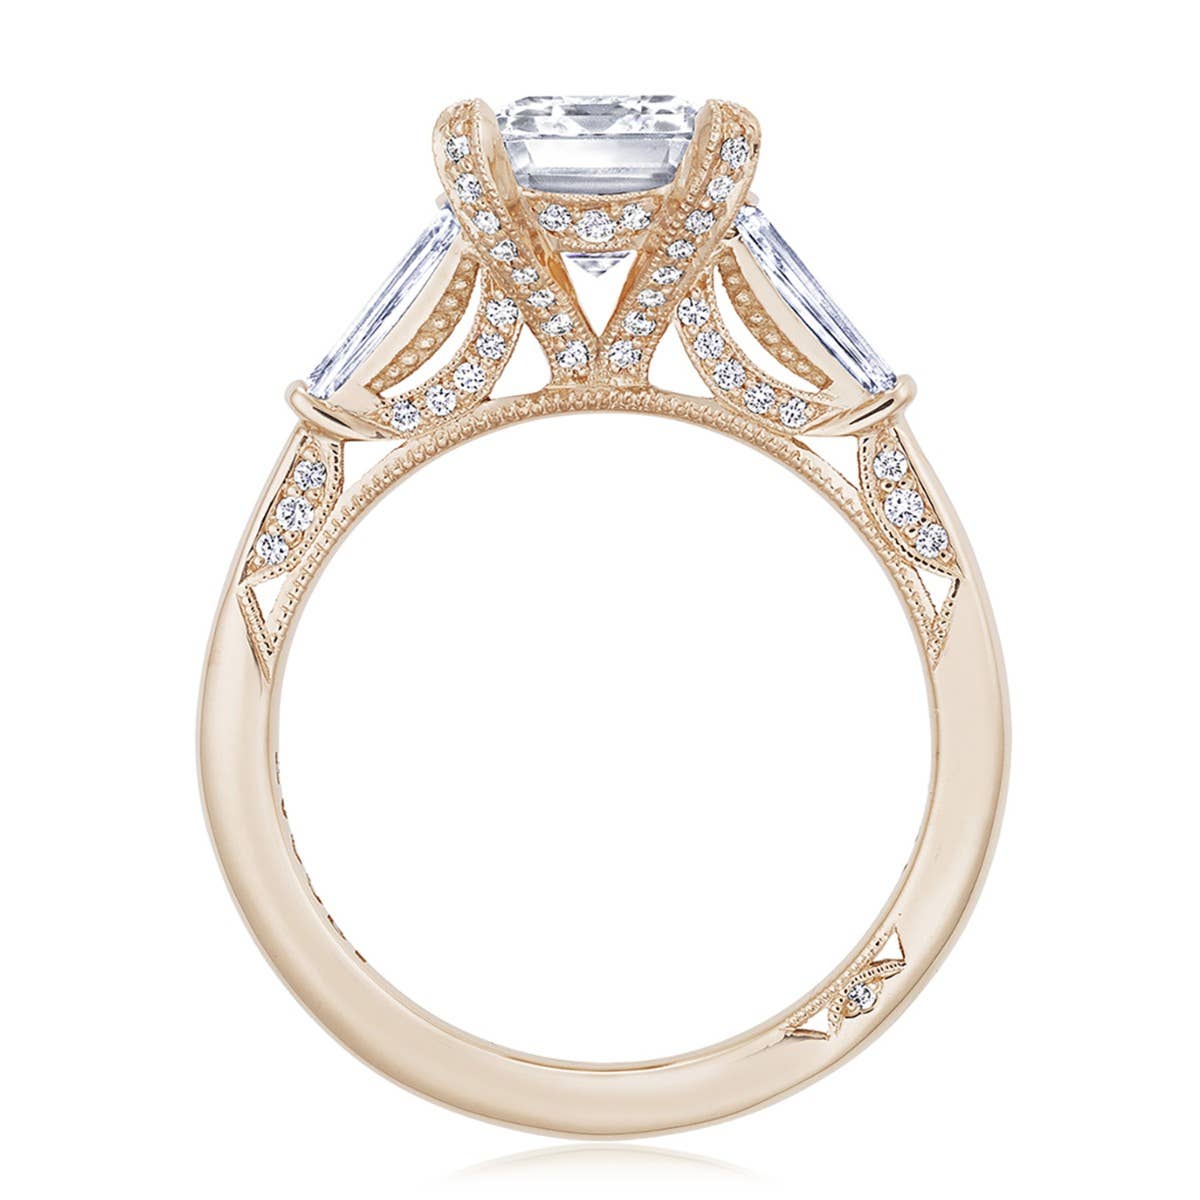 RoyalT engagement ring on white background